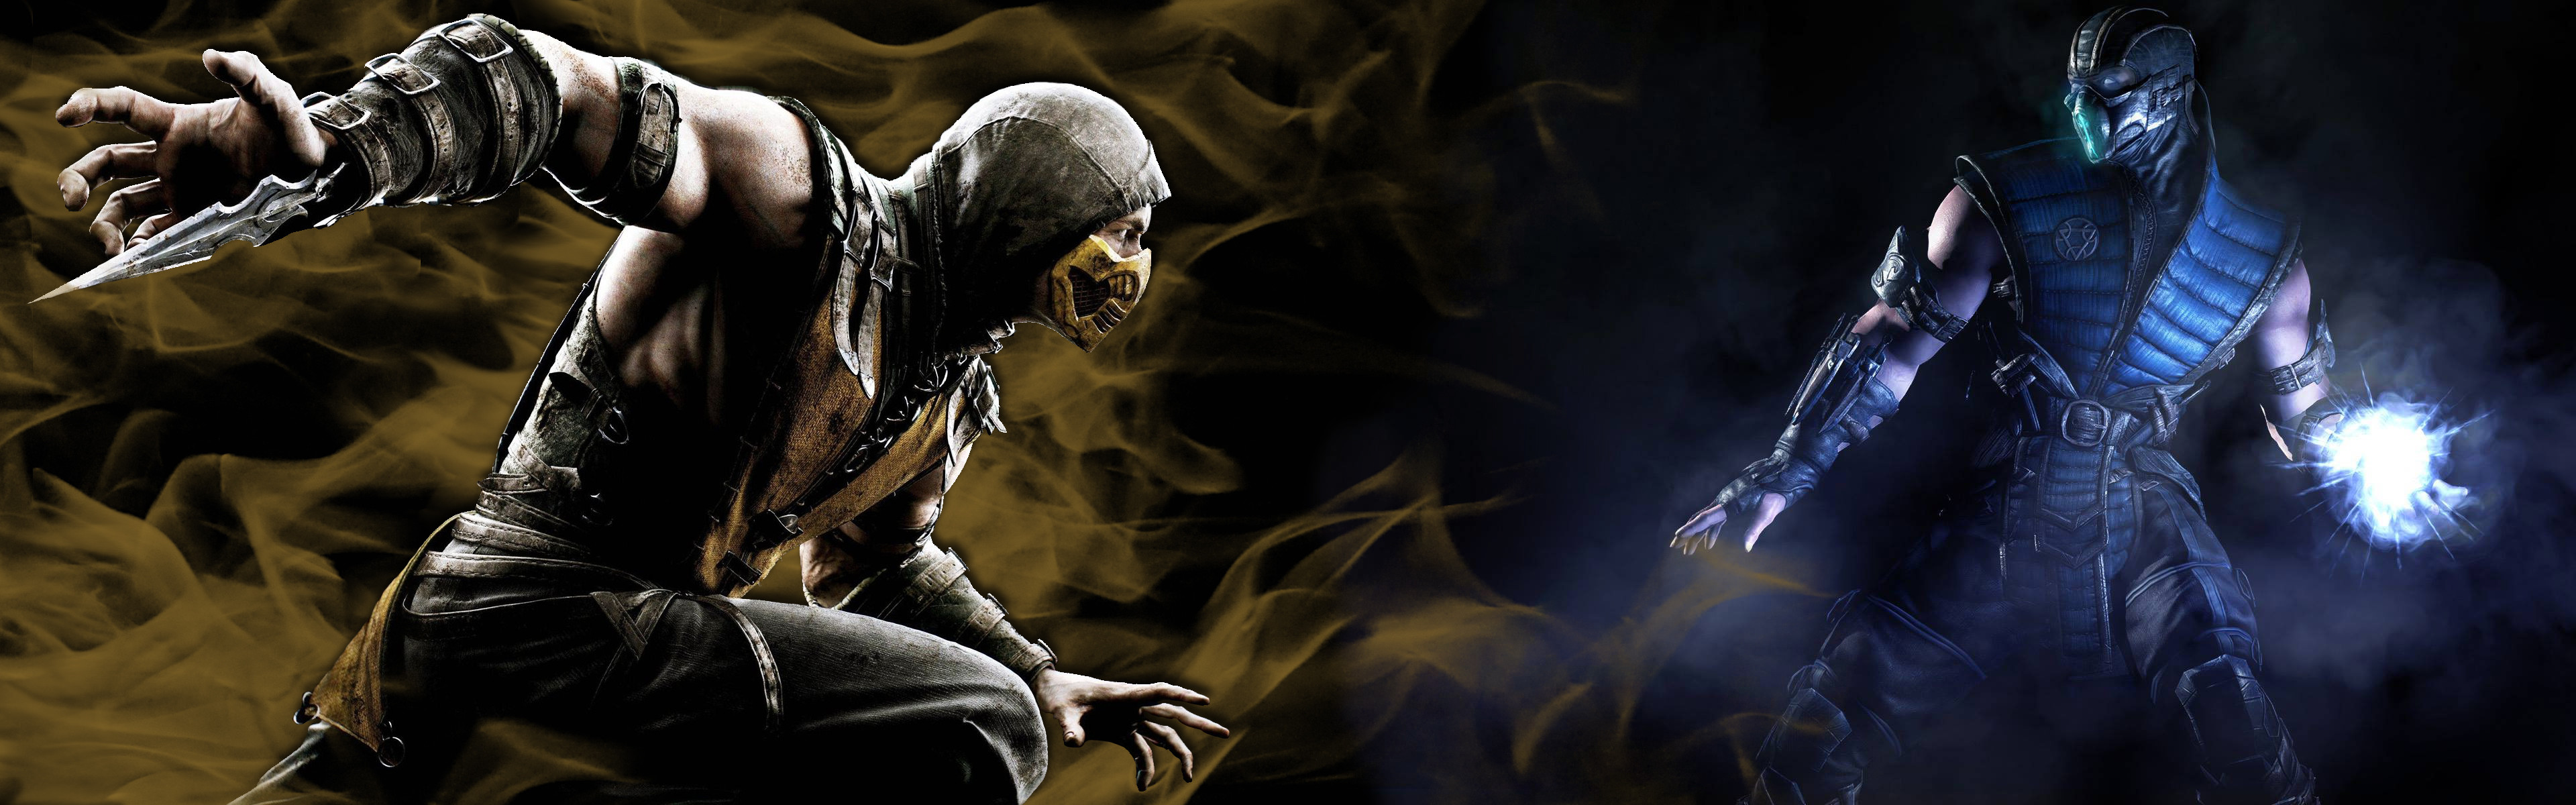 3840x1200 Sub-Zero by Hentiger5544 Mortal Kombat X Background, Scorpion vs. Sub-Zero  by Hentiger5544